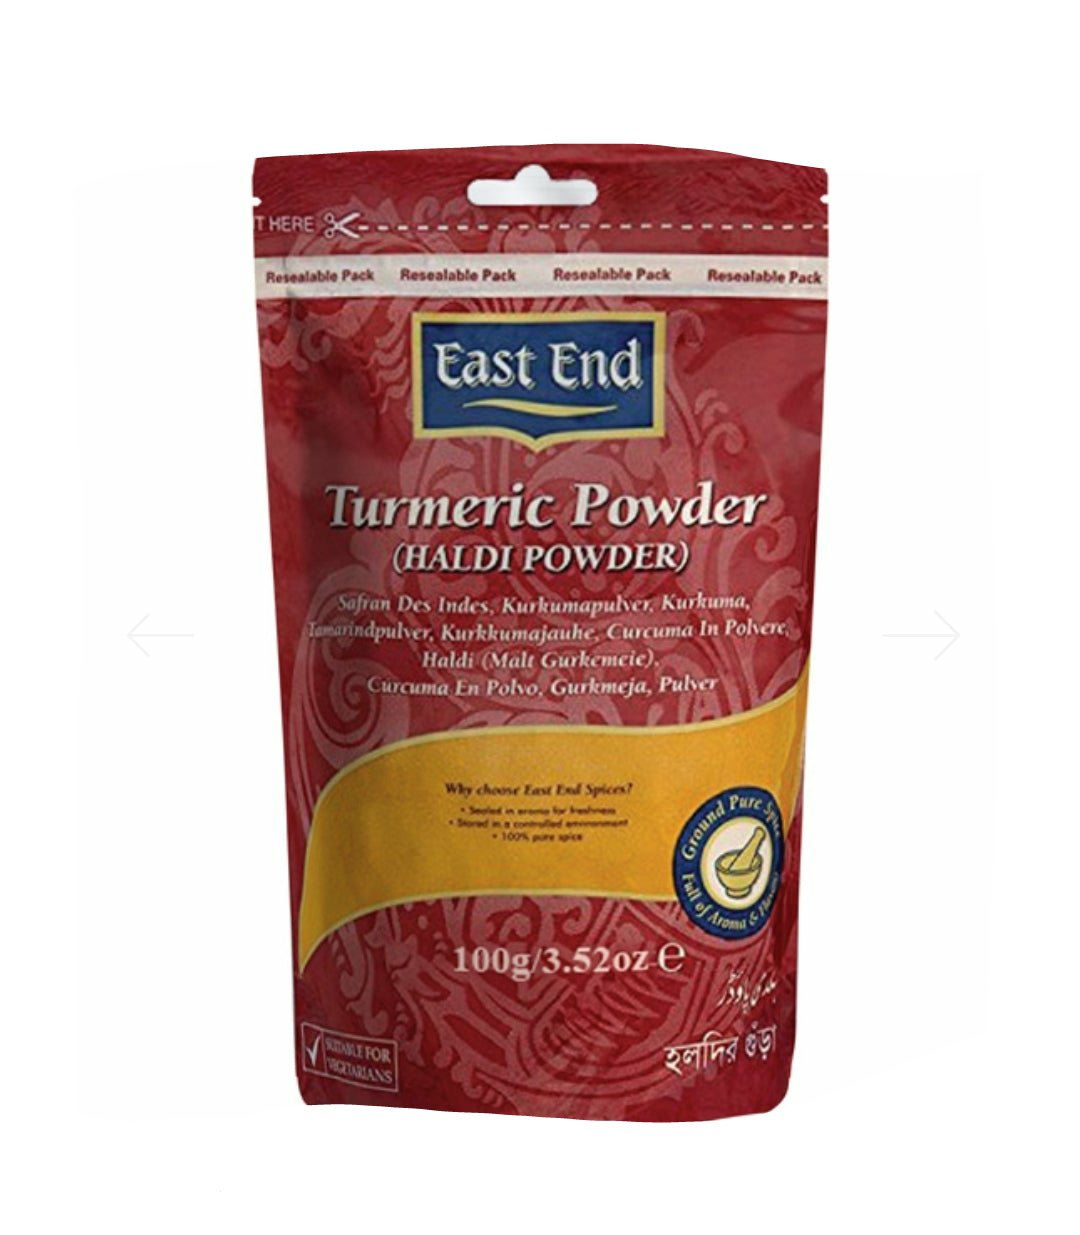 East End Turmeric powder 100g